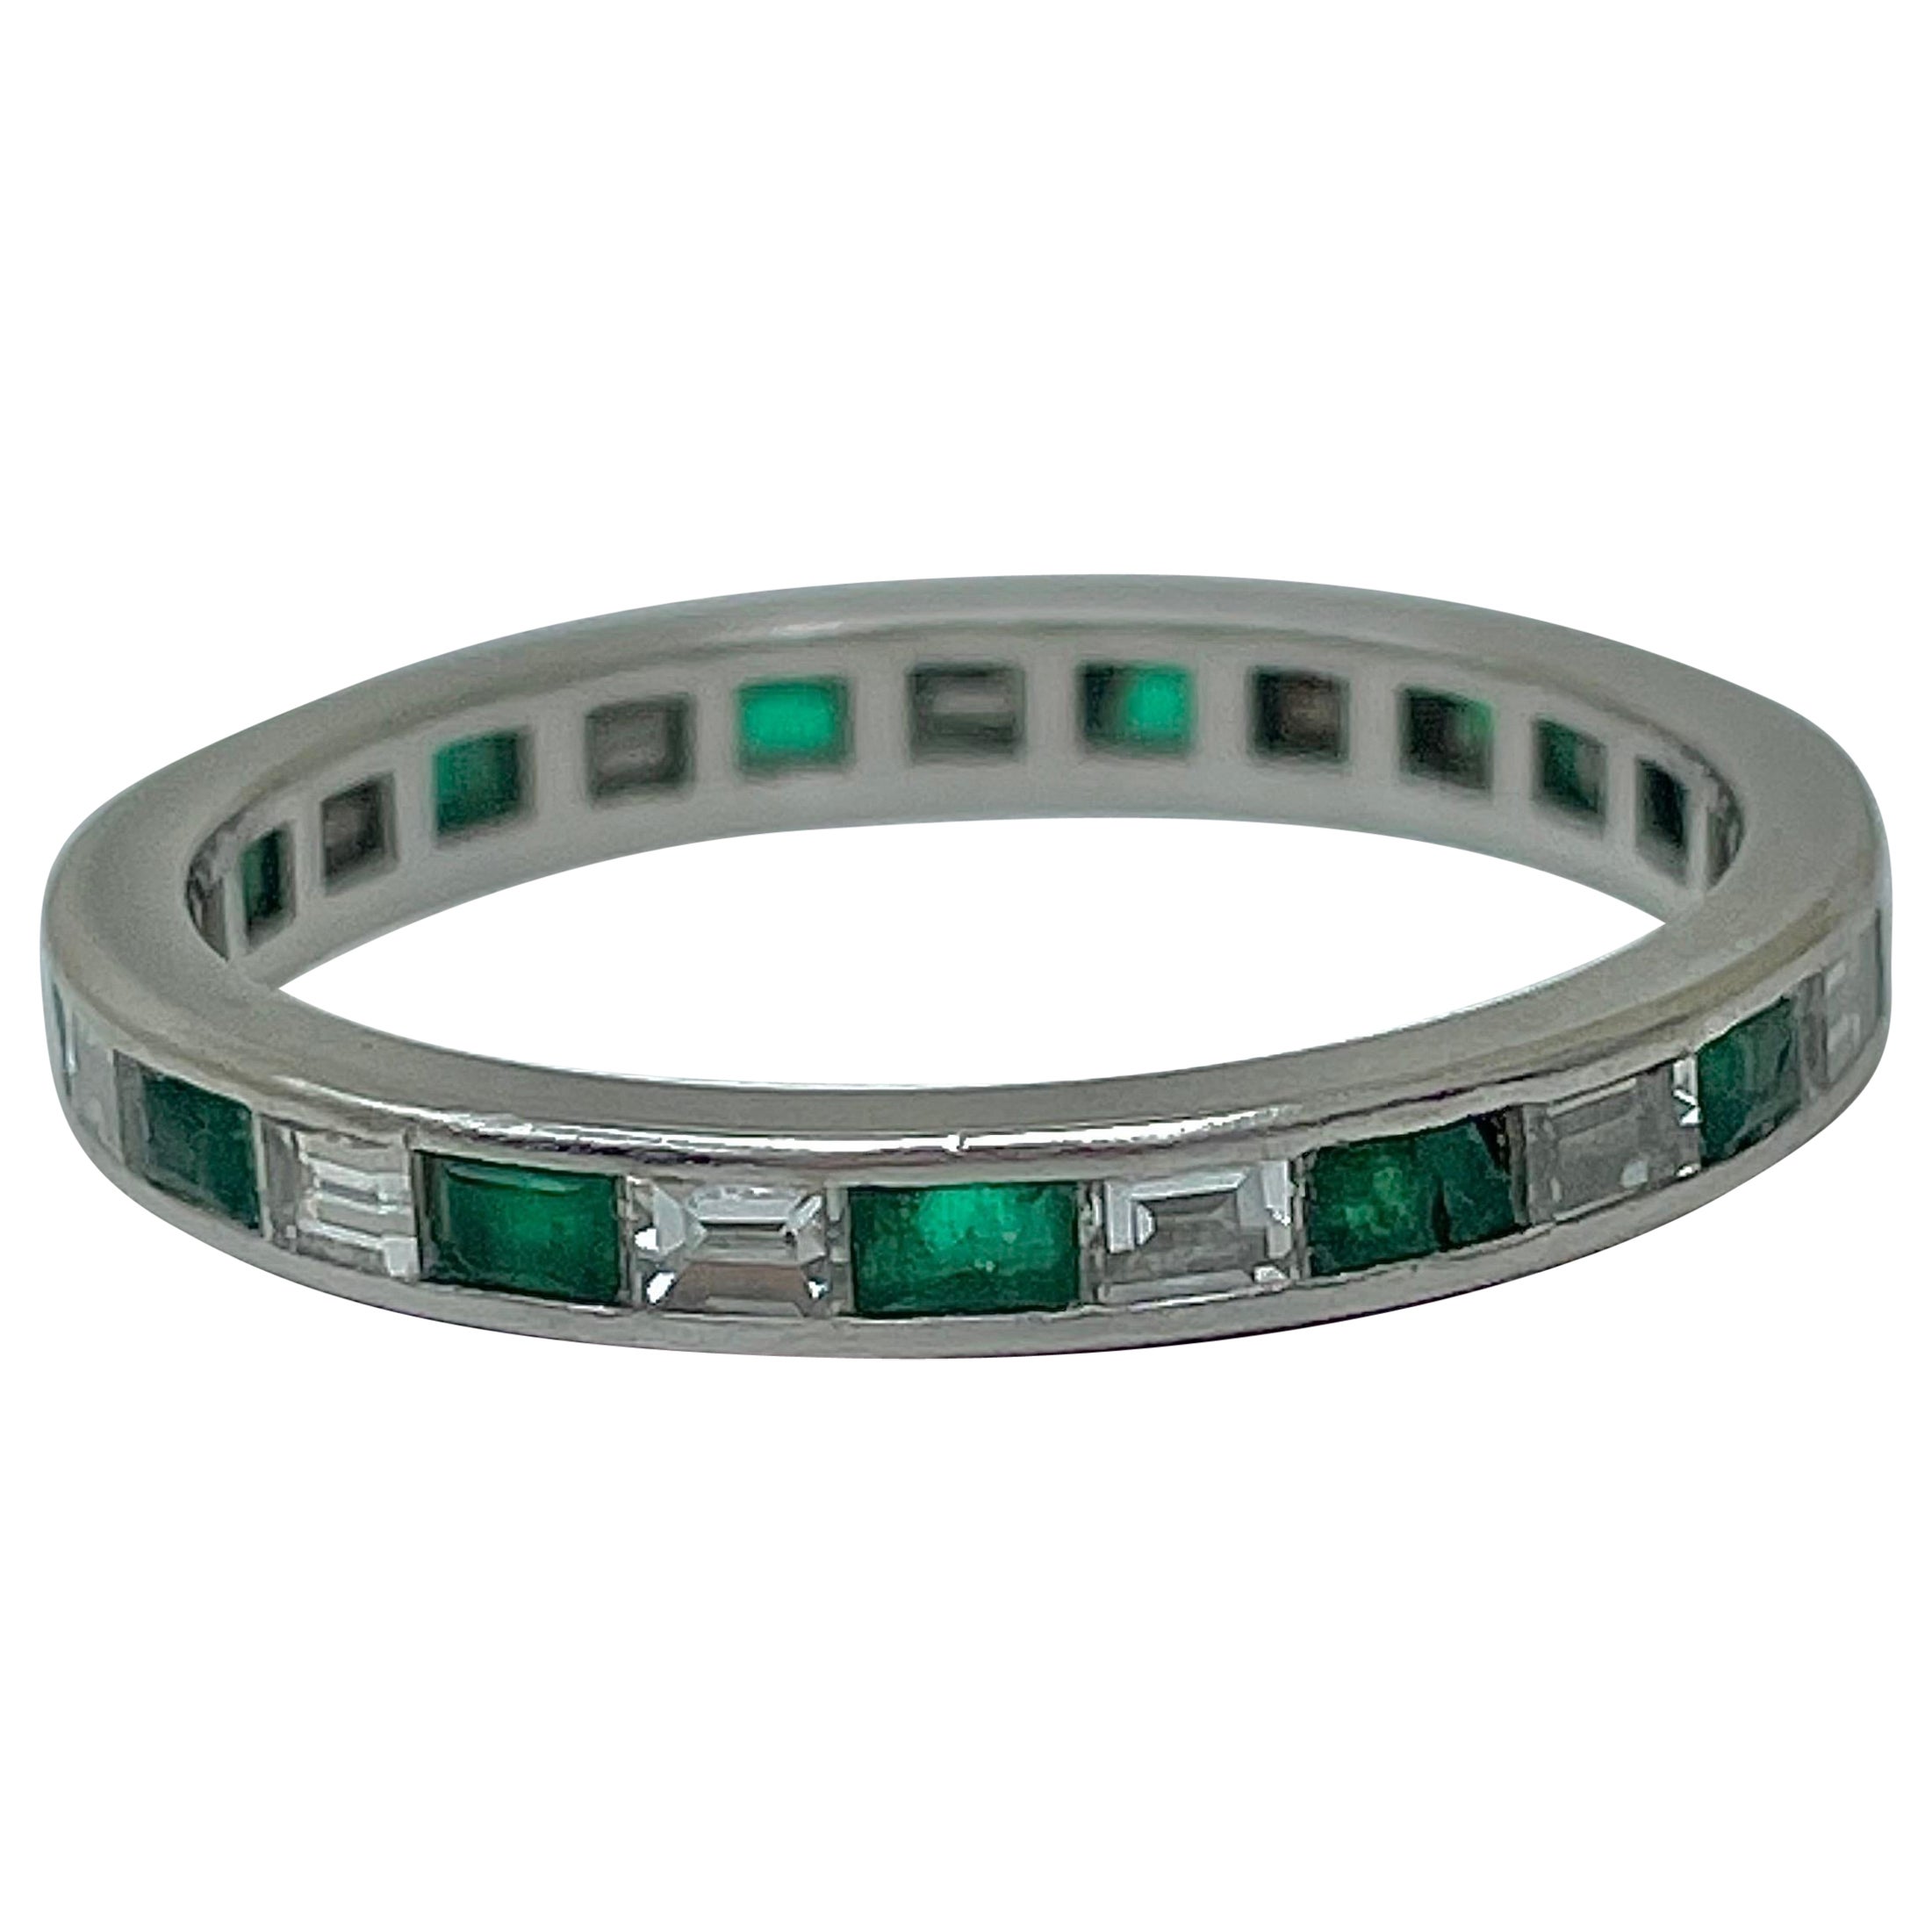 Antique Platinum Emerald and Diamond Full Eternity Band Ring